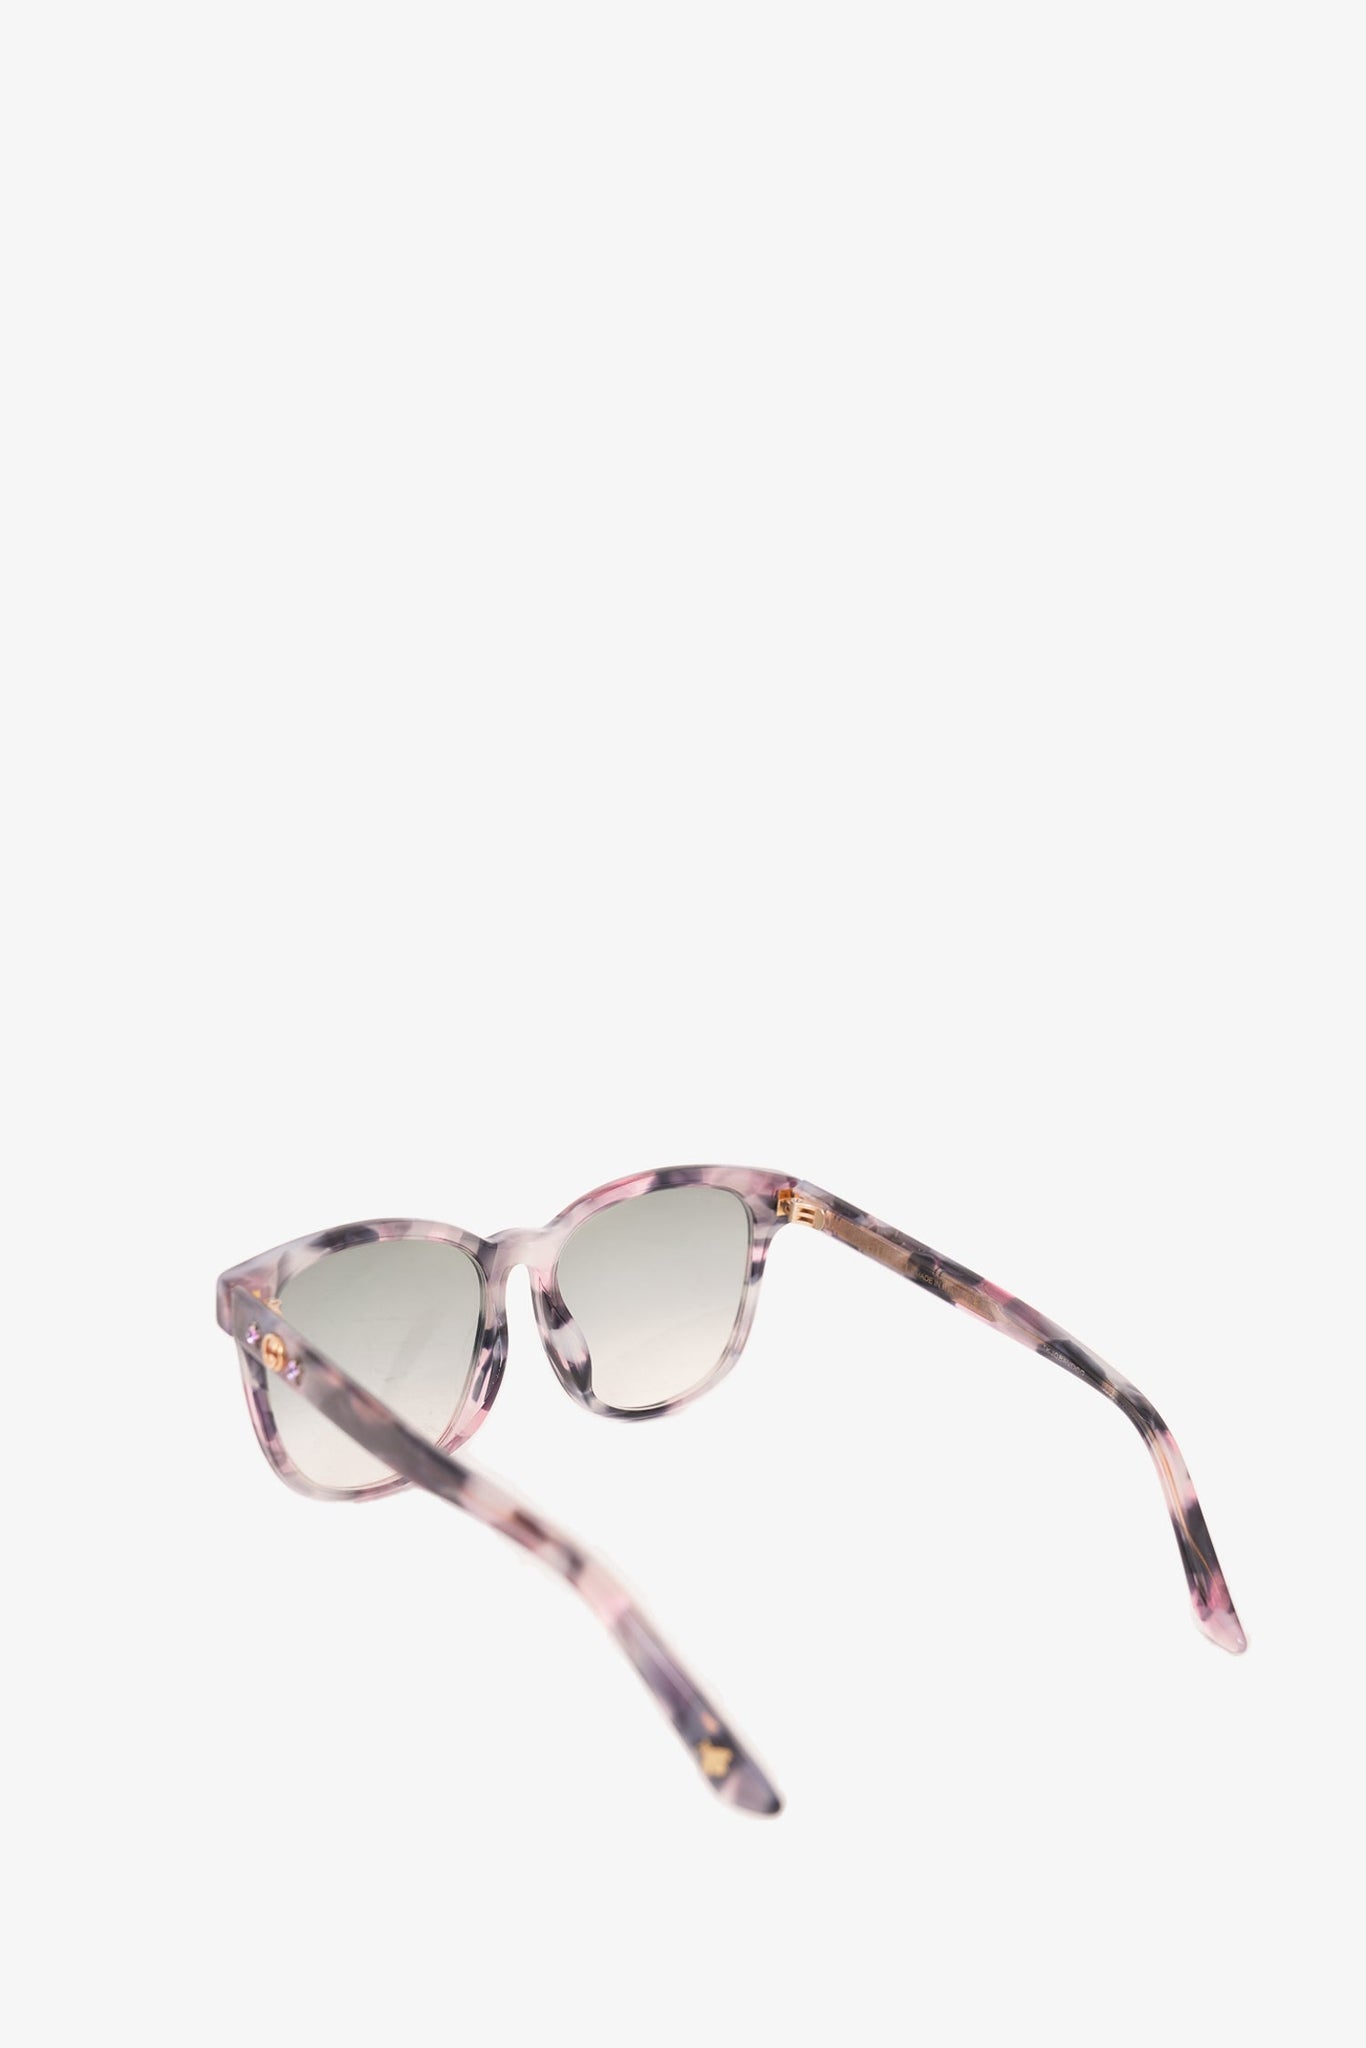 Gucci Cat-Eye Tinted Sunglasses